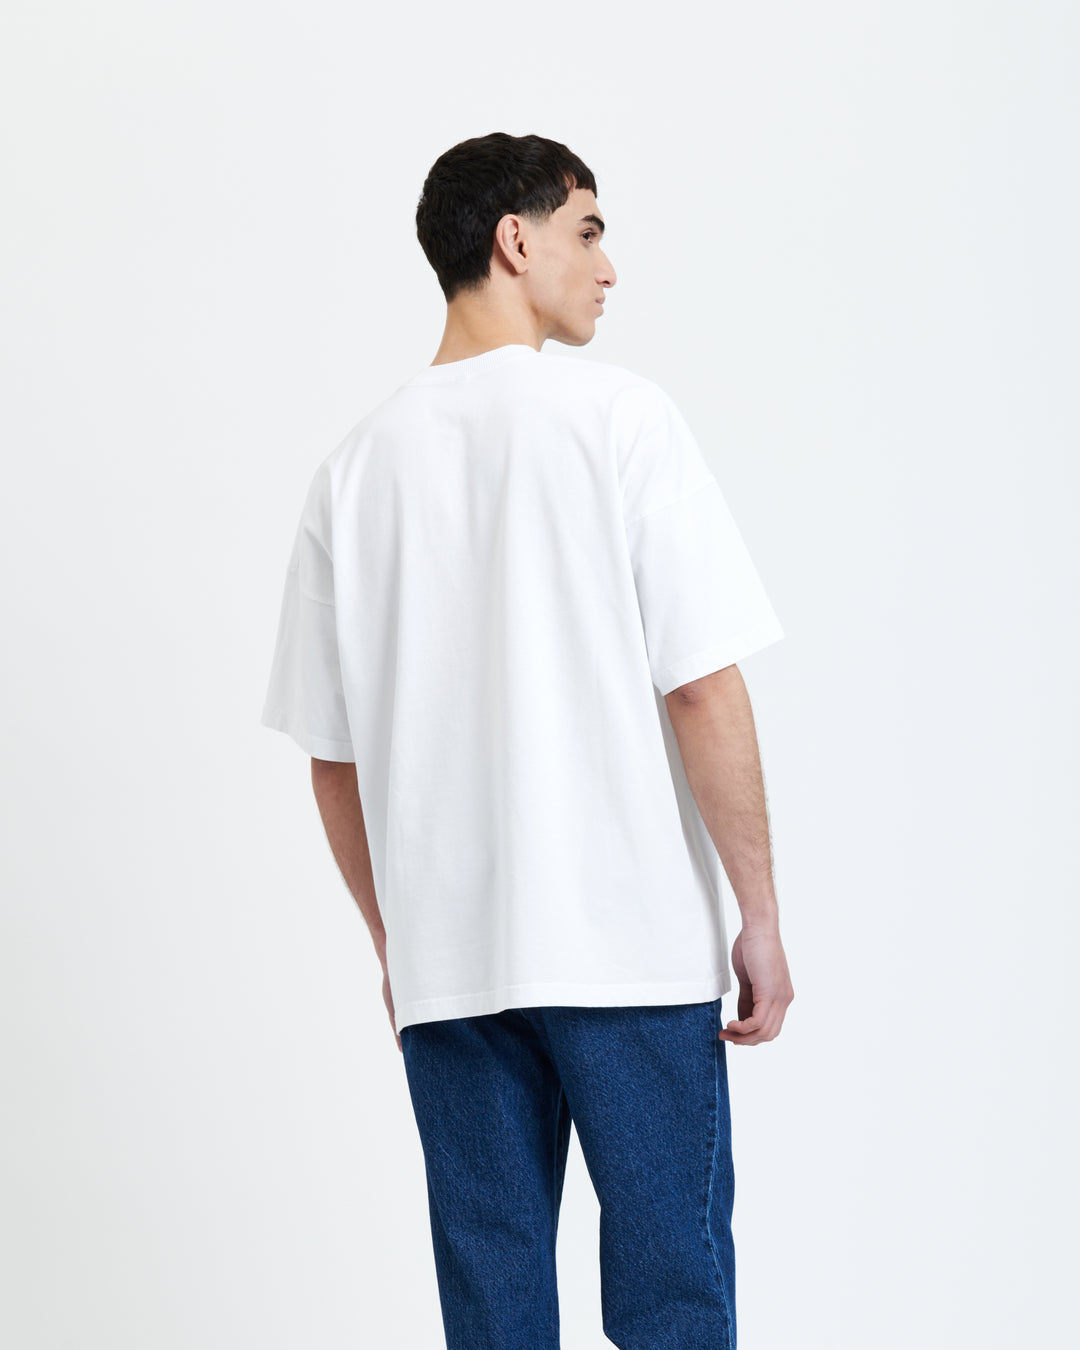 New Optimist menswear Relaxed T-shirt factory print T-shirt